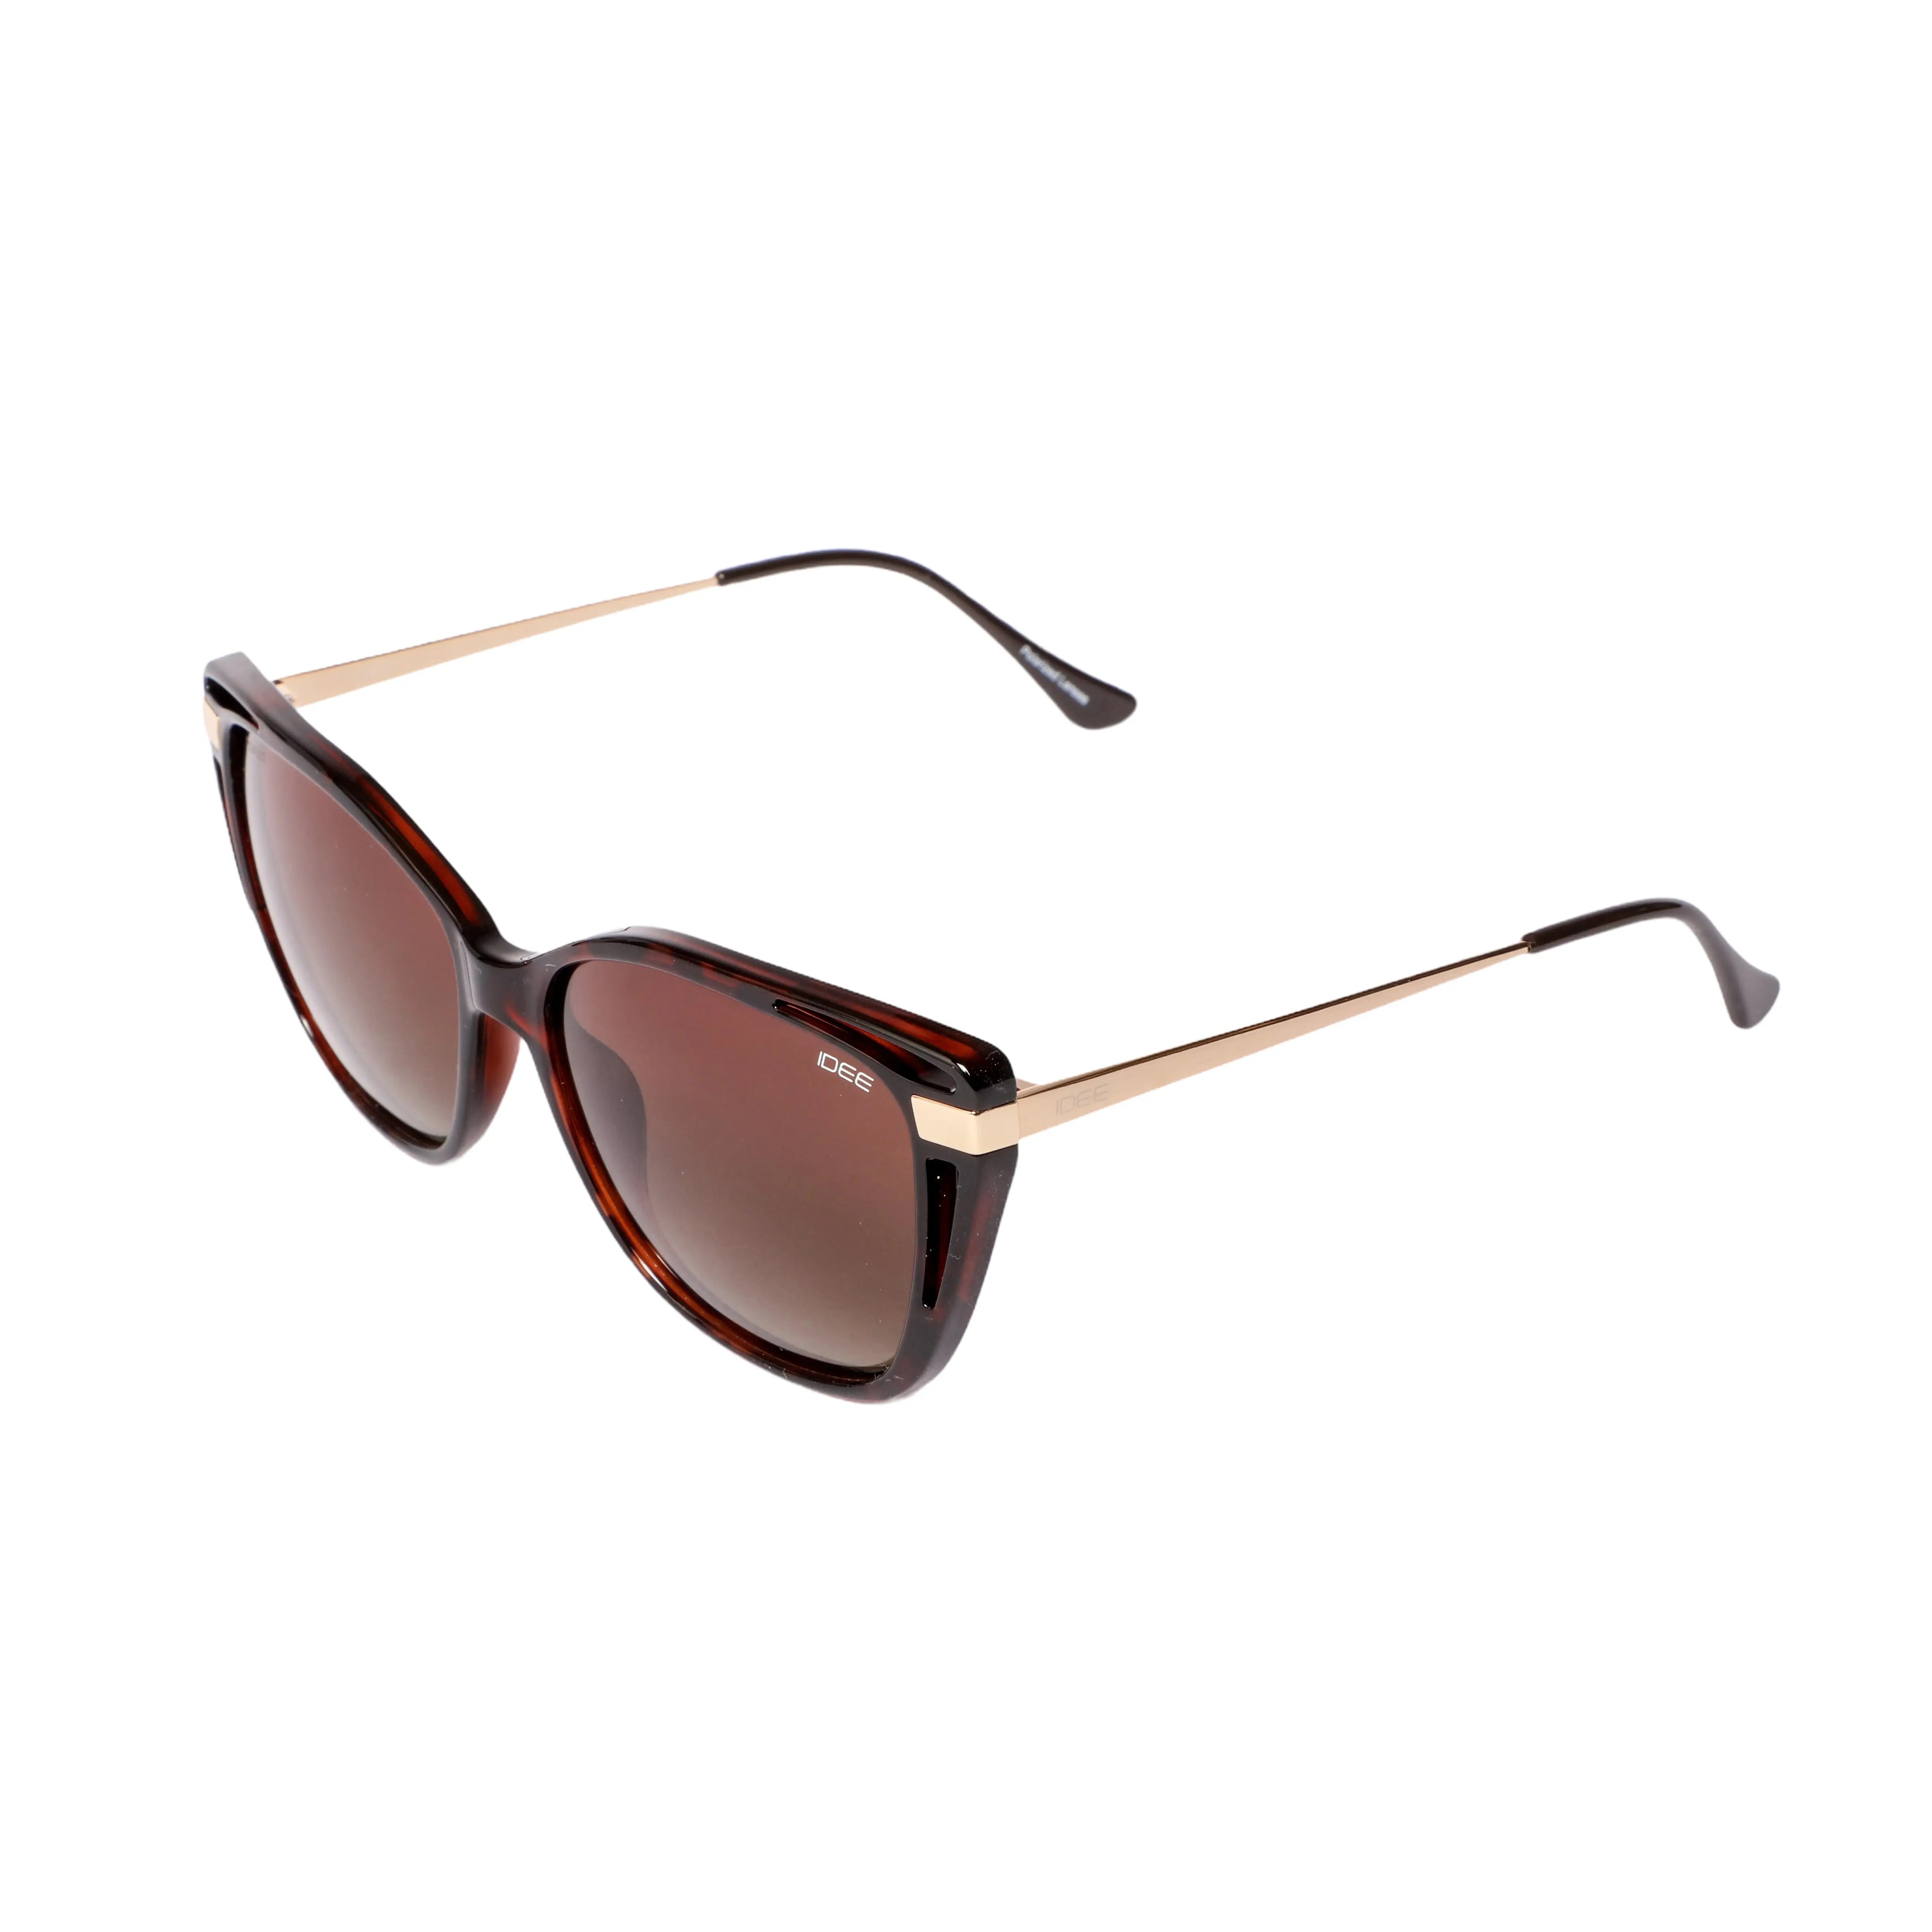 IDEE-S3016--C2 Sunglasses - Premium Sunglasses from IDEE - Just Rs. 3740! Shop now at Laxmi Opticians